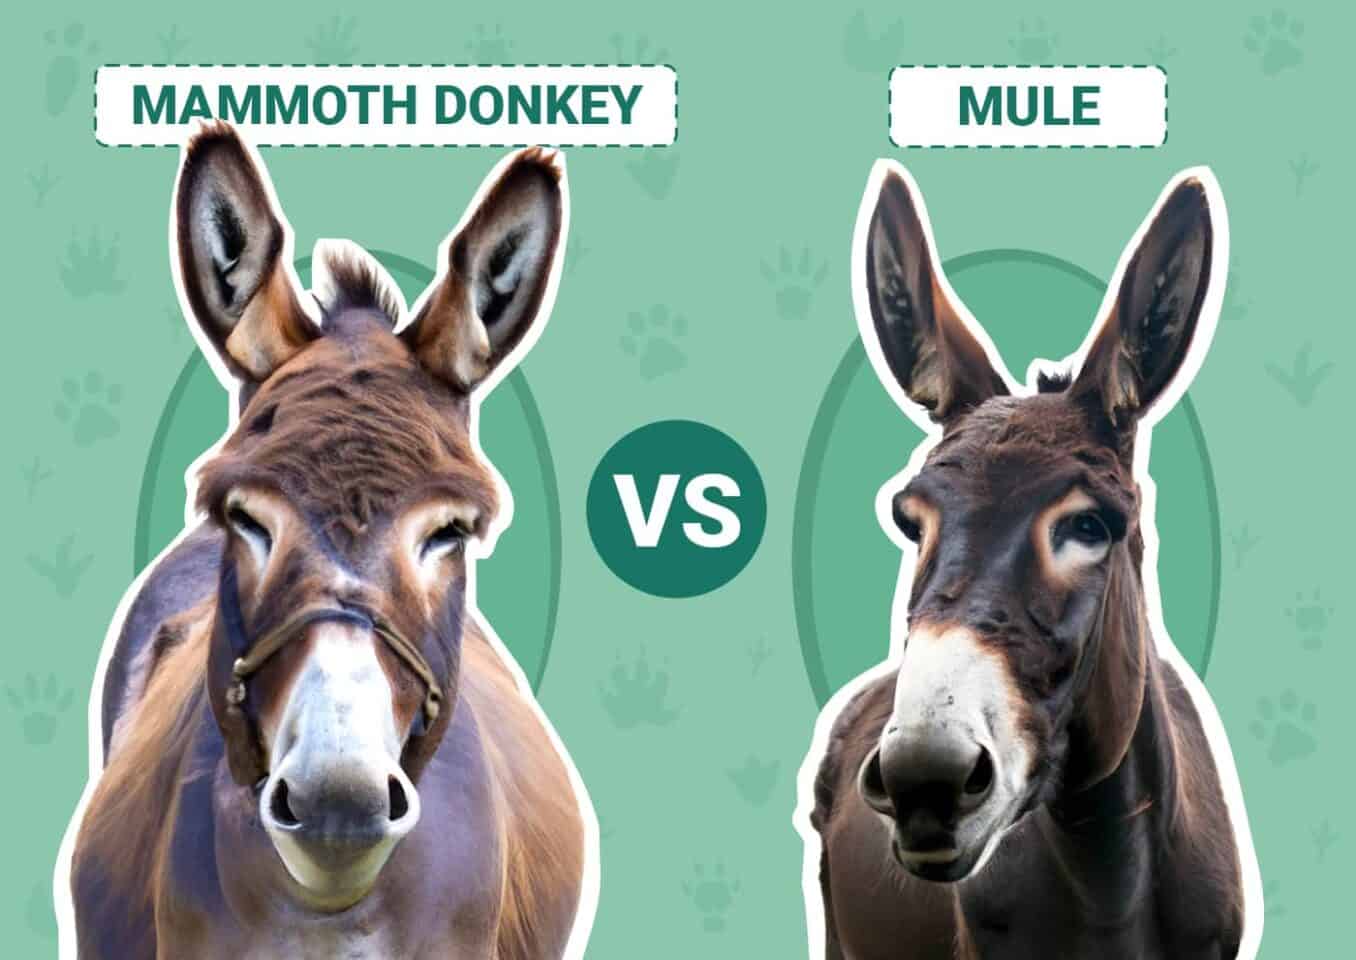 Mammoth Donkey vs. Mule